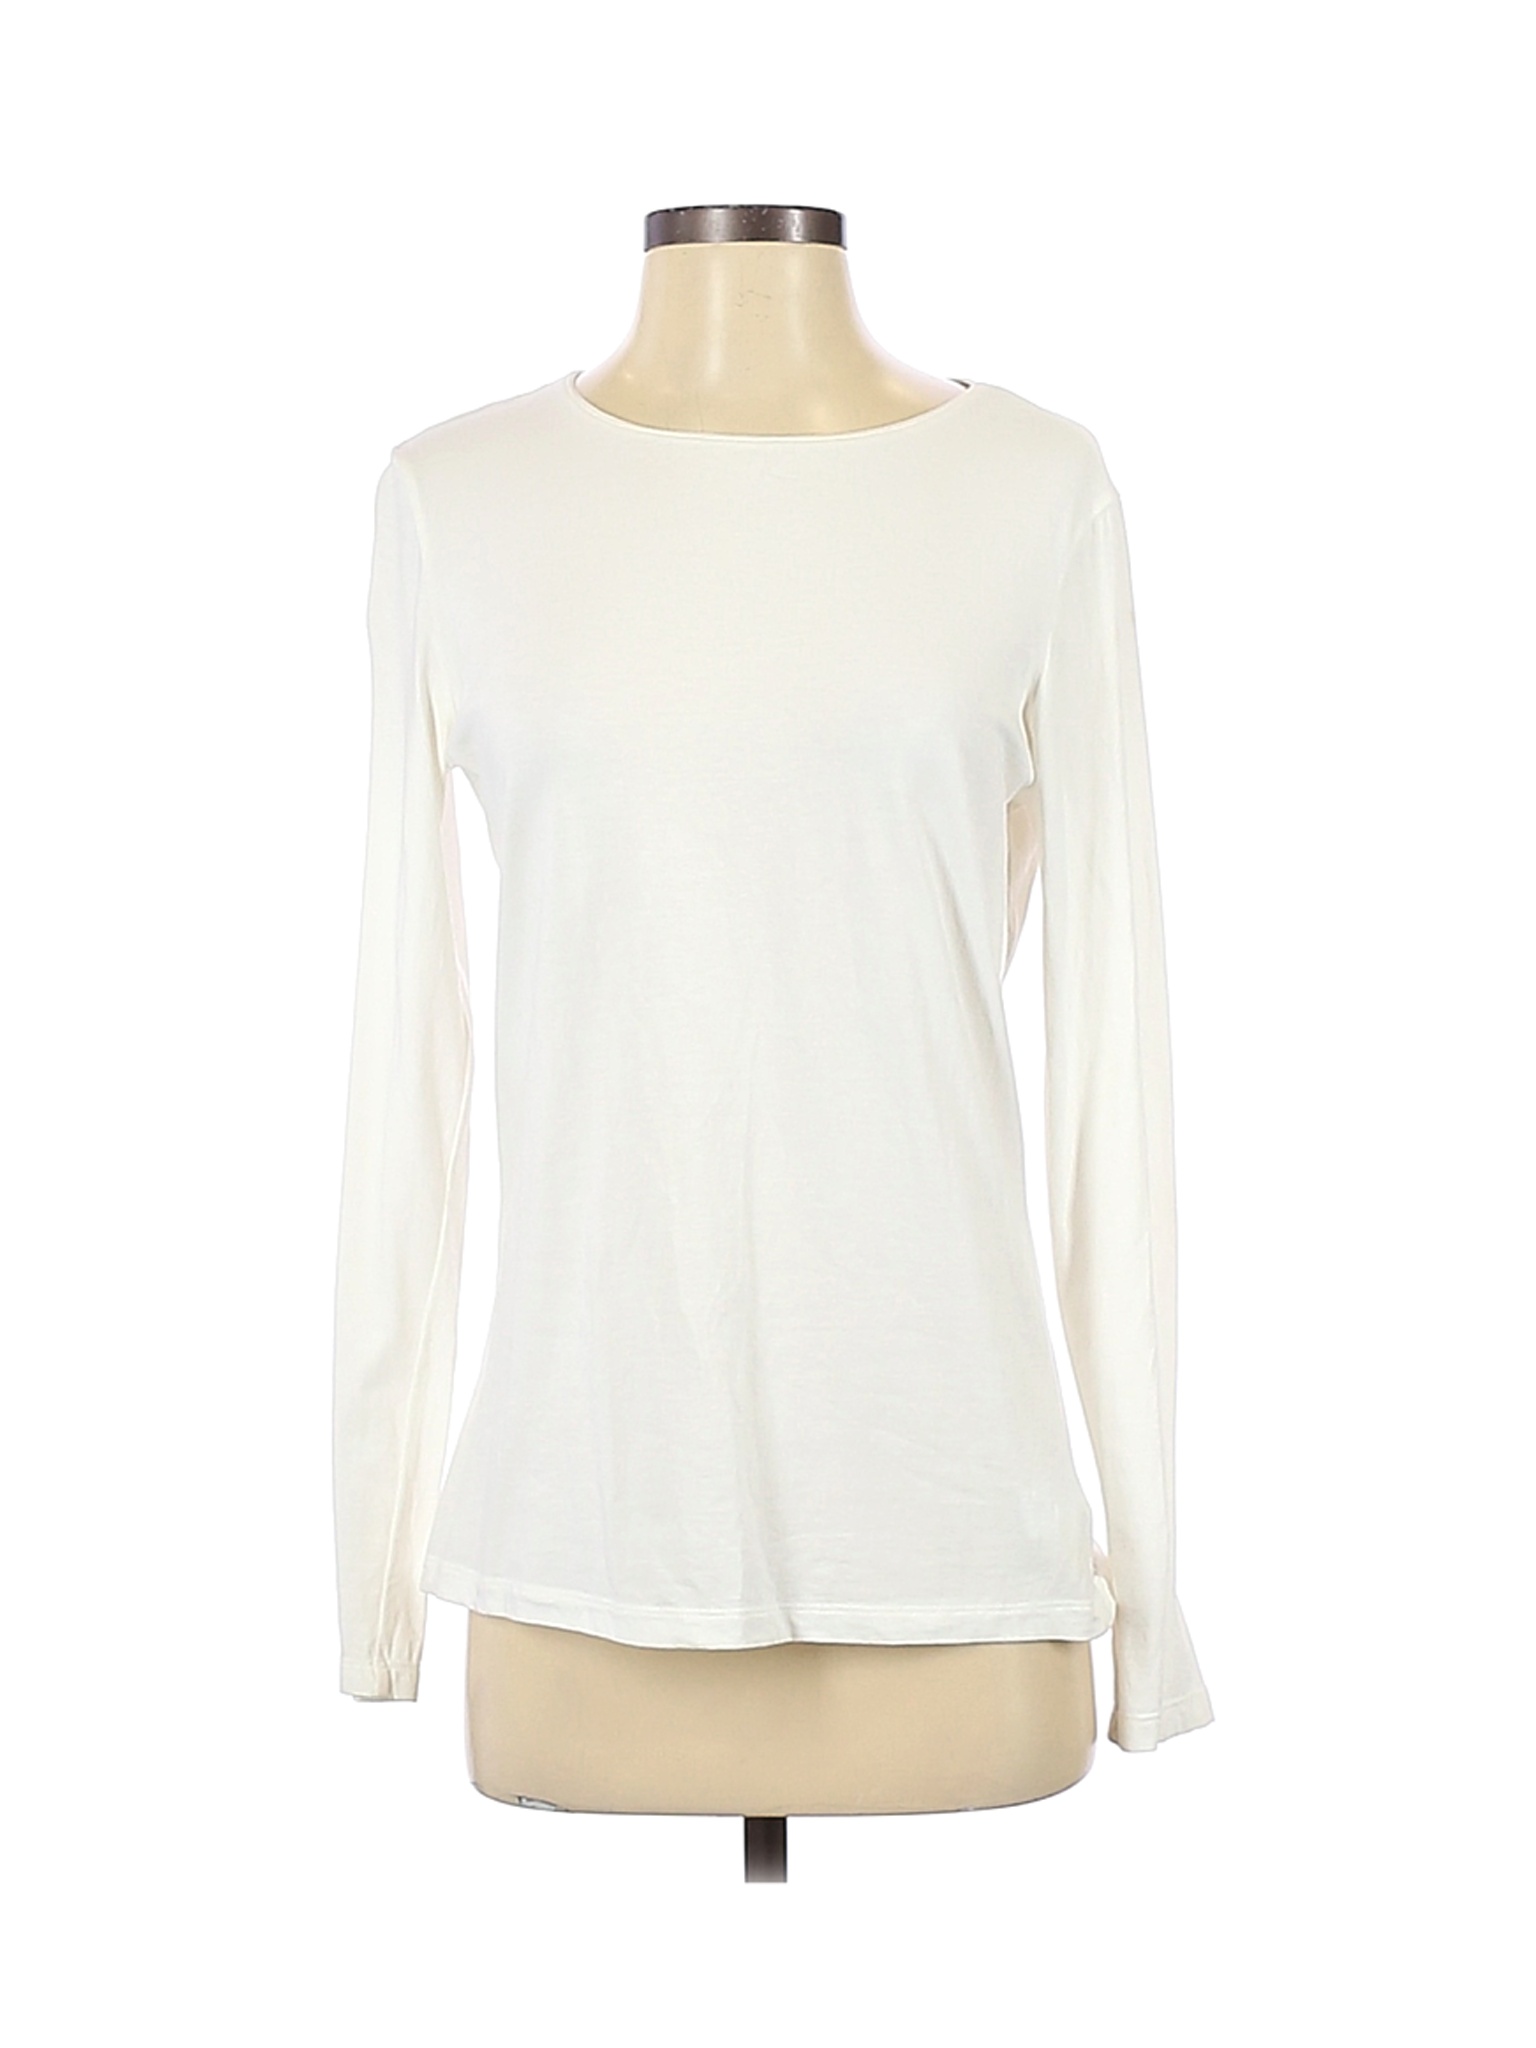 Coldwater Creek Women White Long Sleeve T-Shirt S | eBay